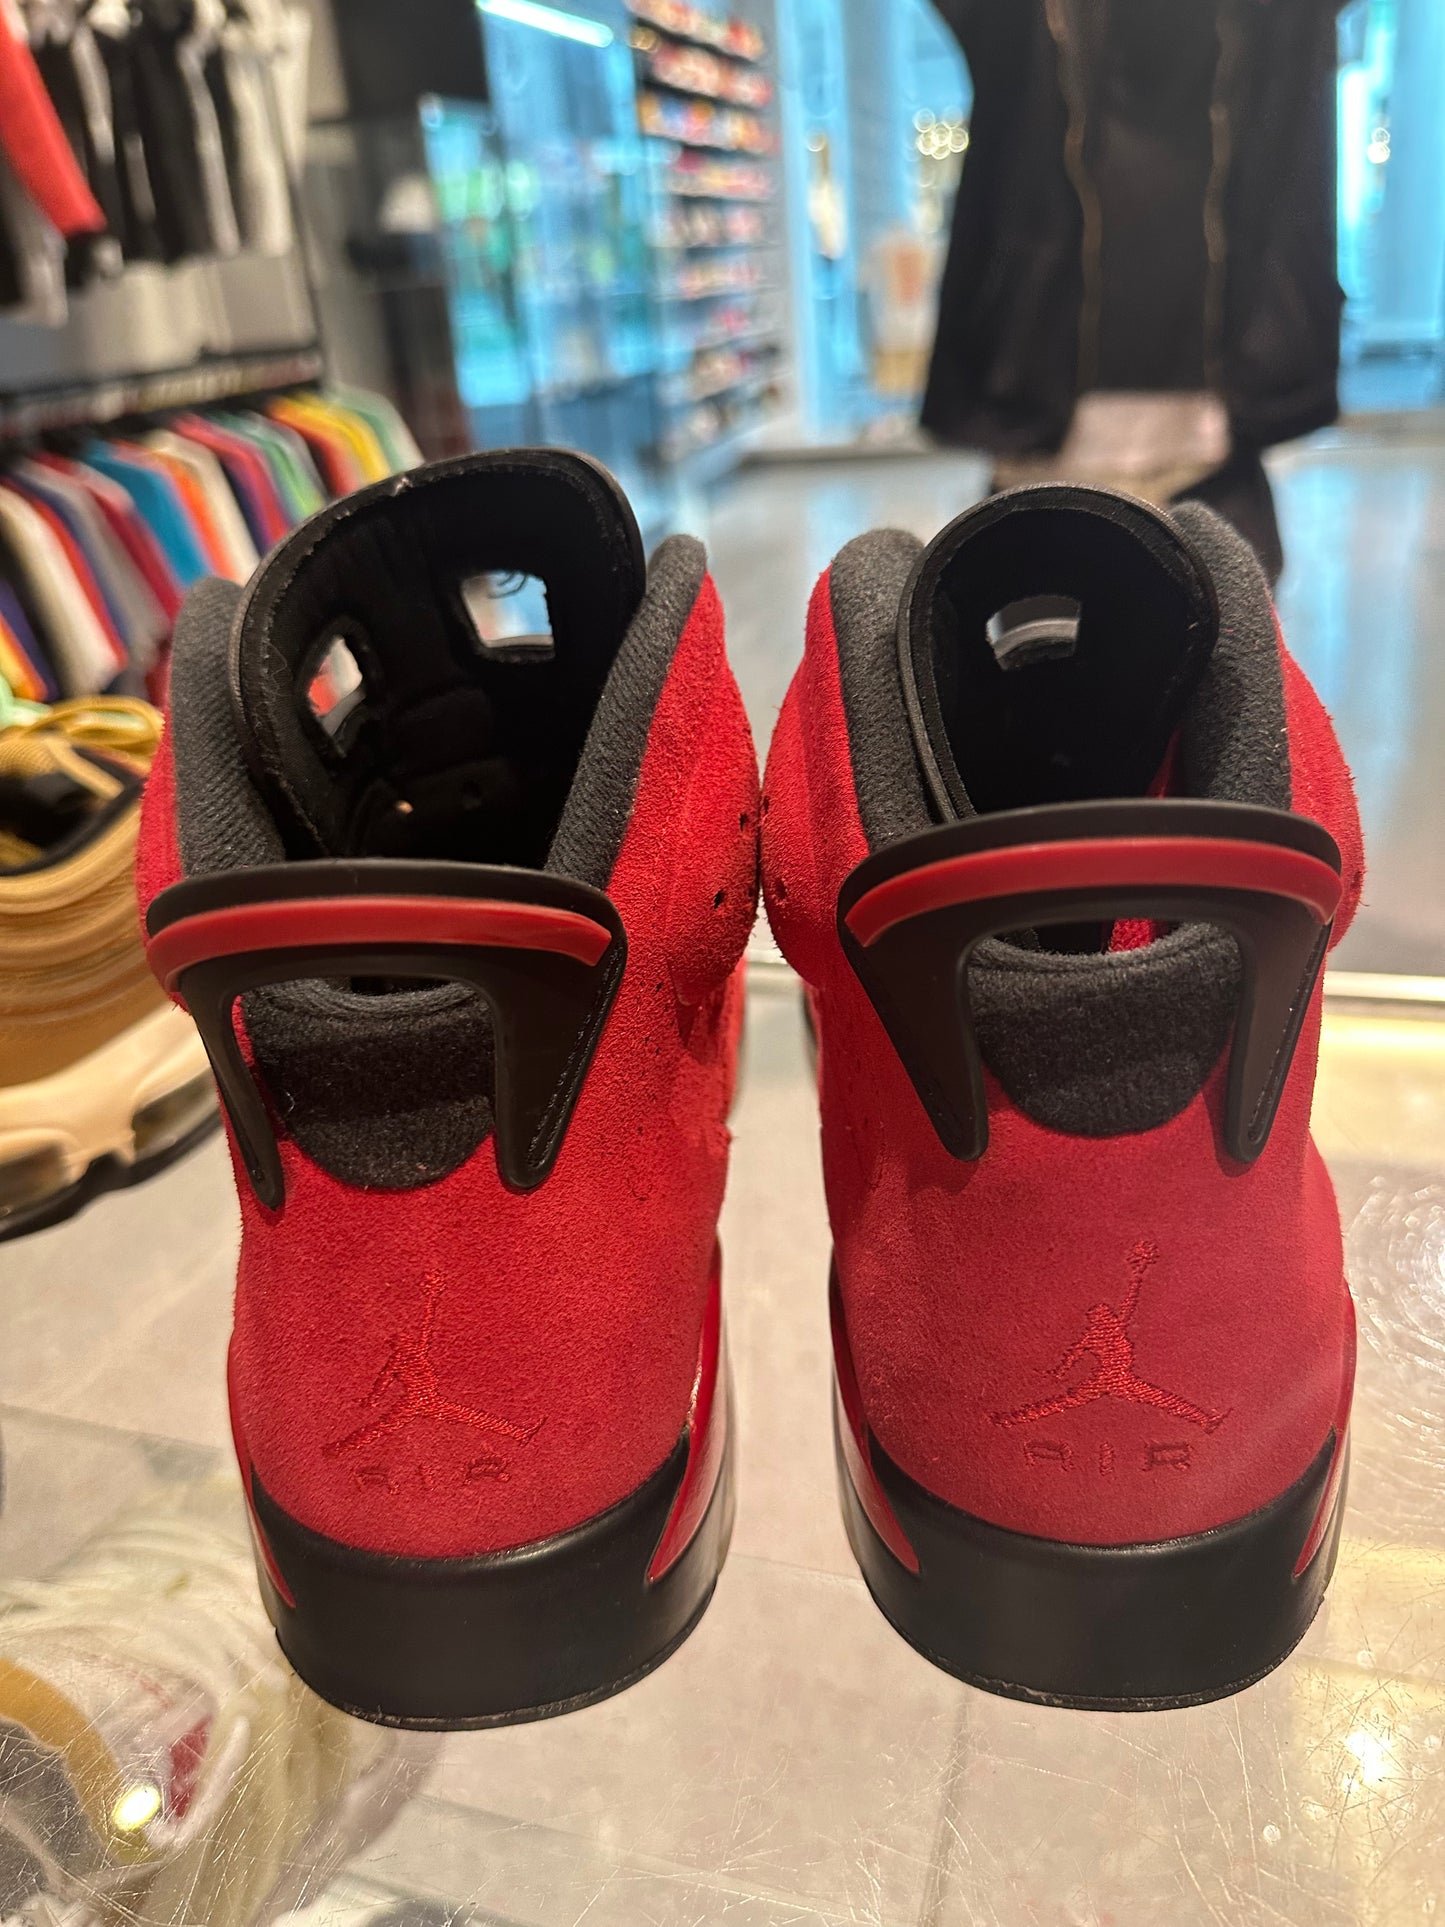 Size 9 Air Jordan 6 “Toro Bravo” (Mall)